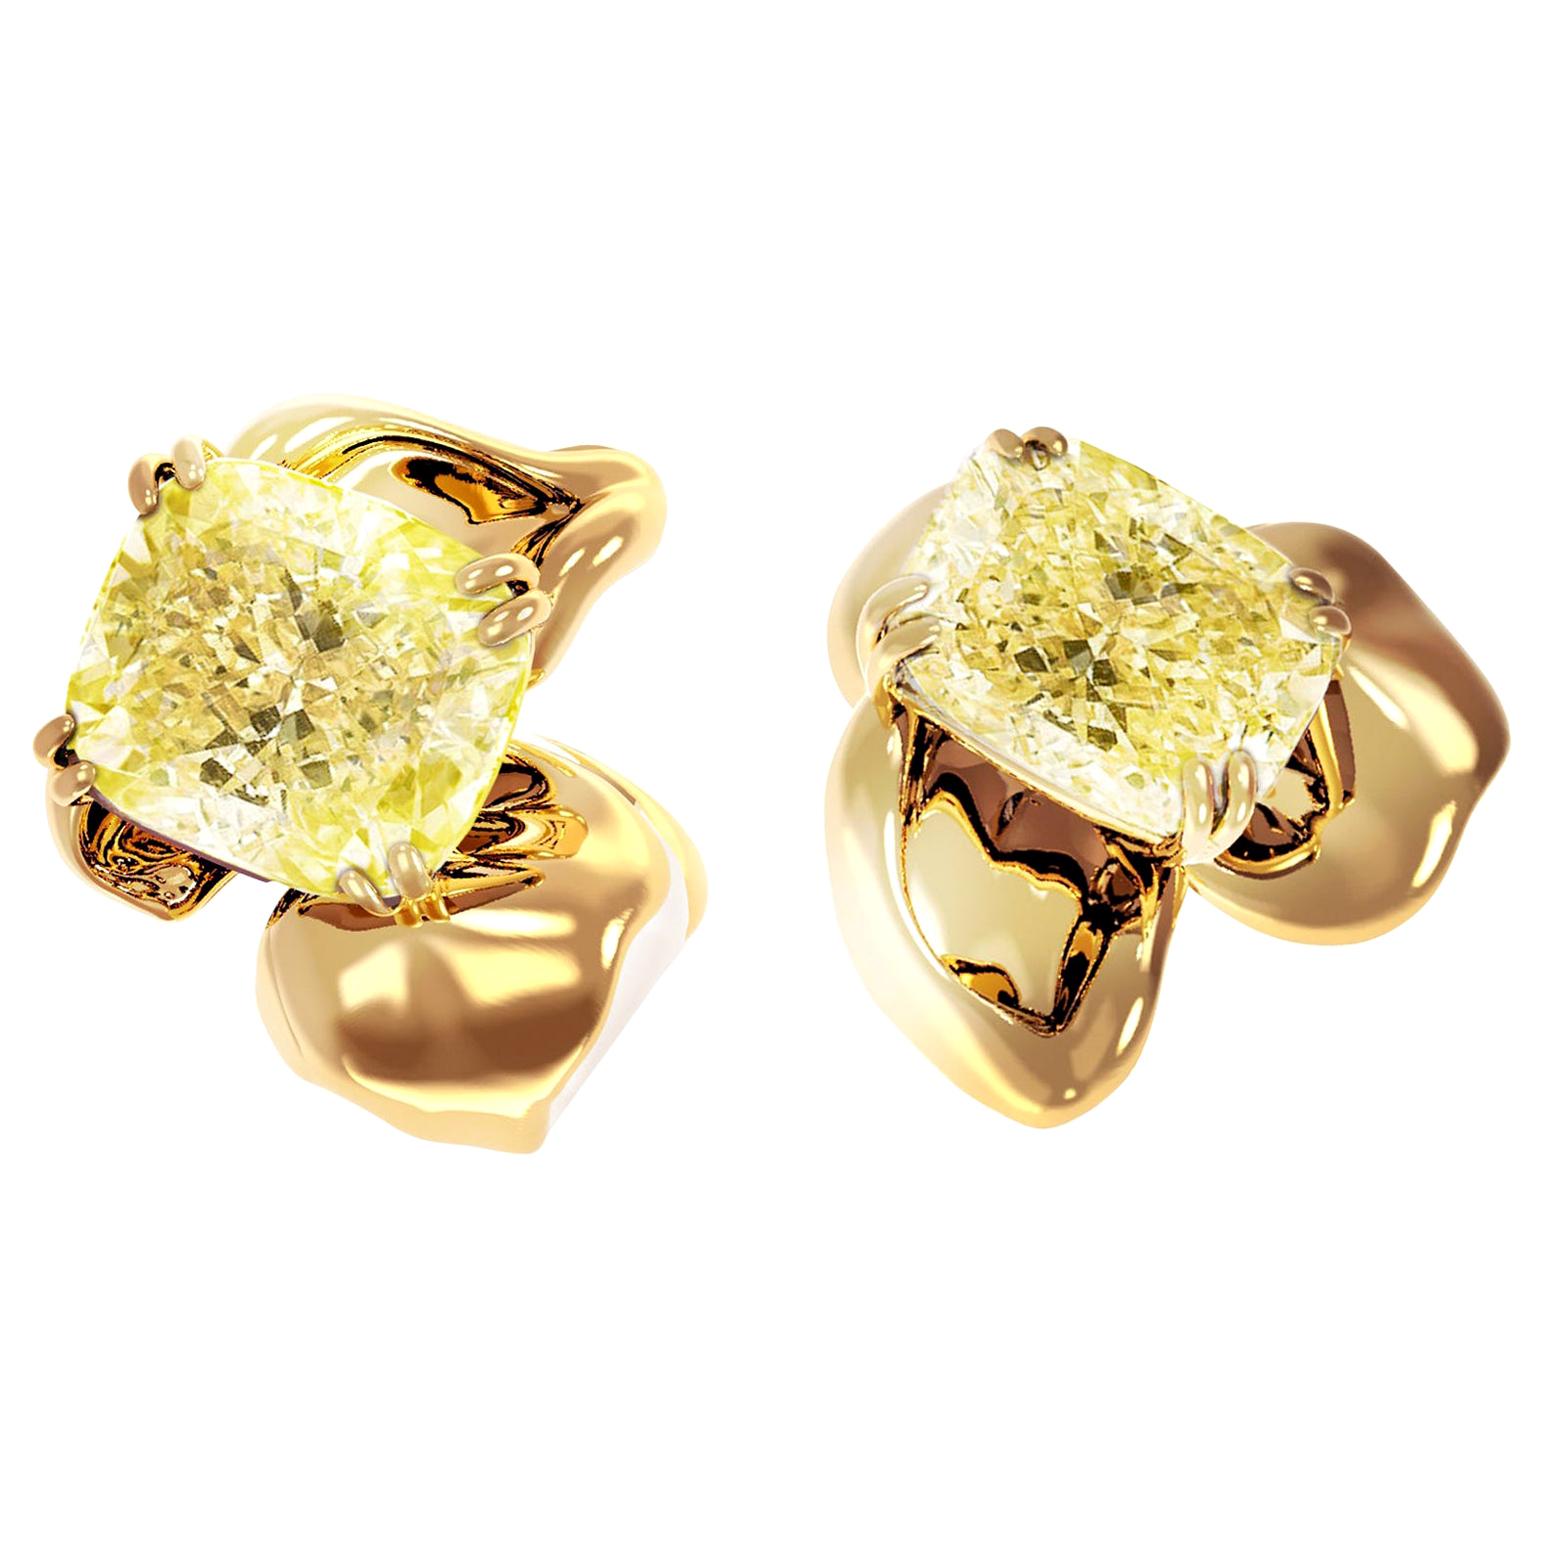 18 Karat Gold Clip-On Earrings with 4 Carat GIA Certified Fancy Yellow Diamonds